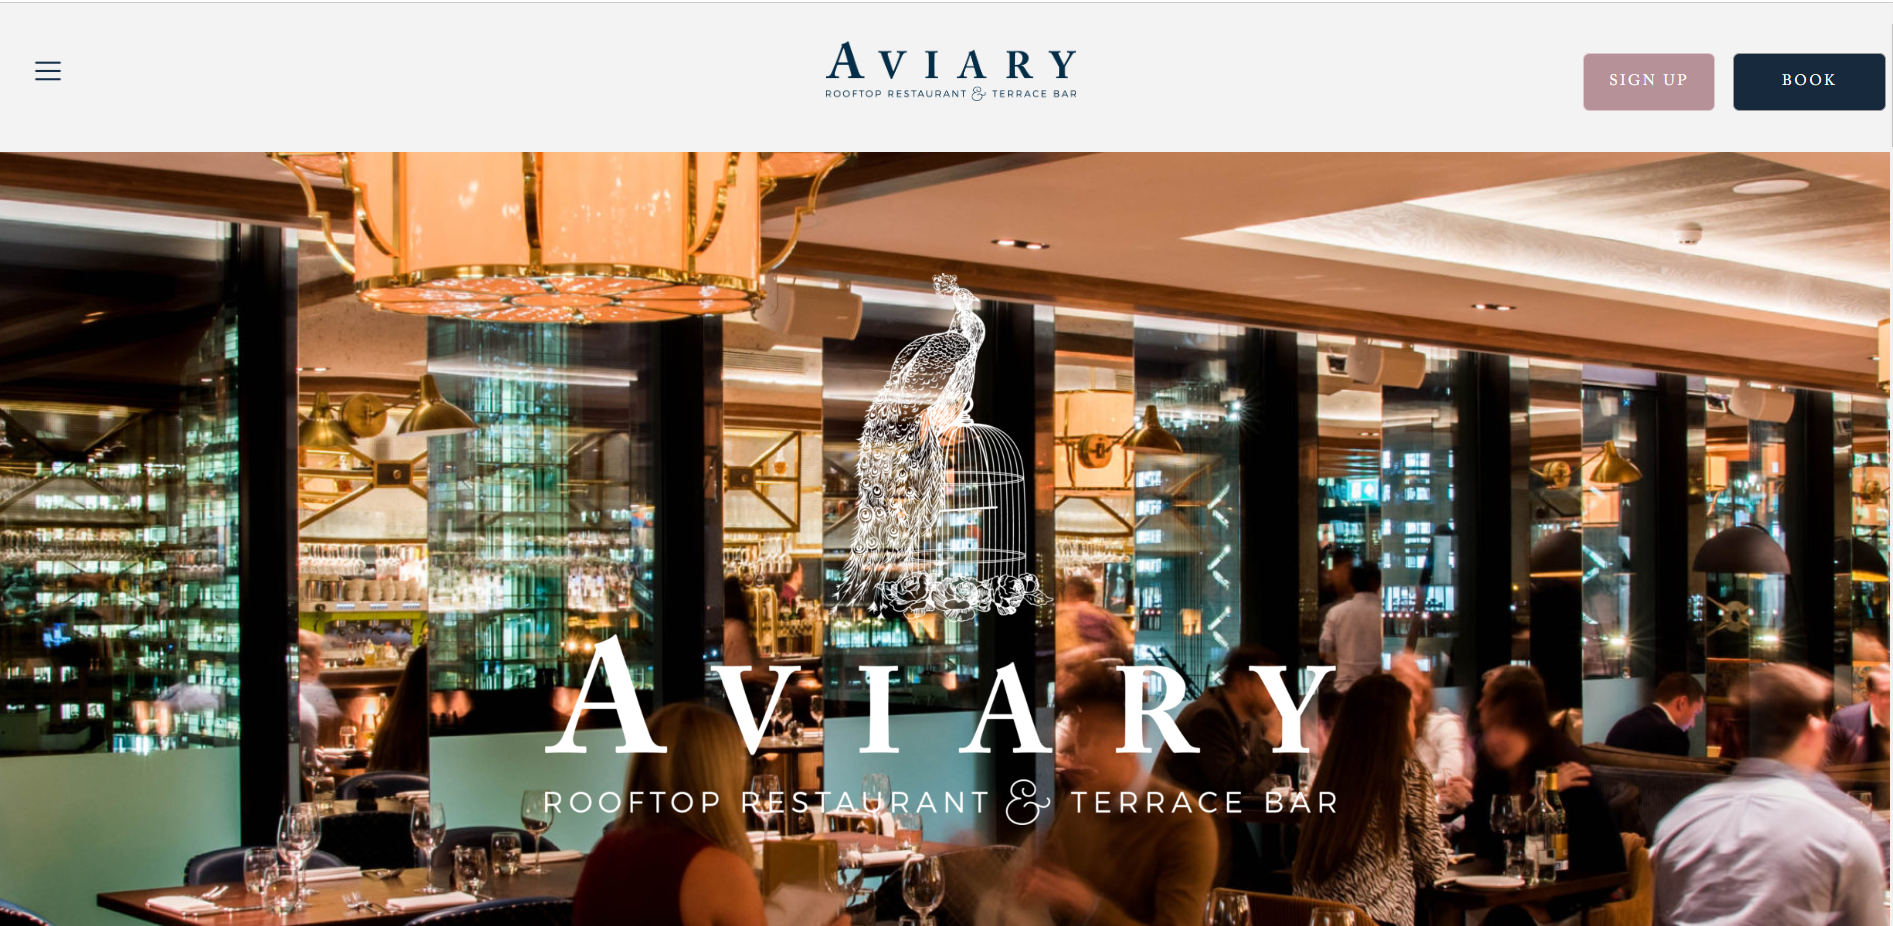 Aviary Rooftop Restaurant